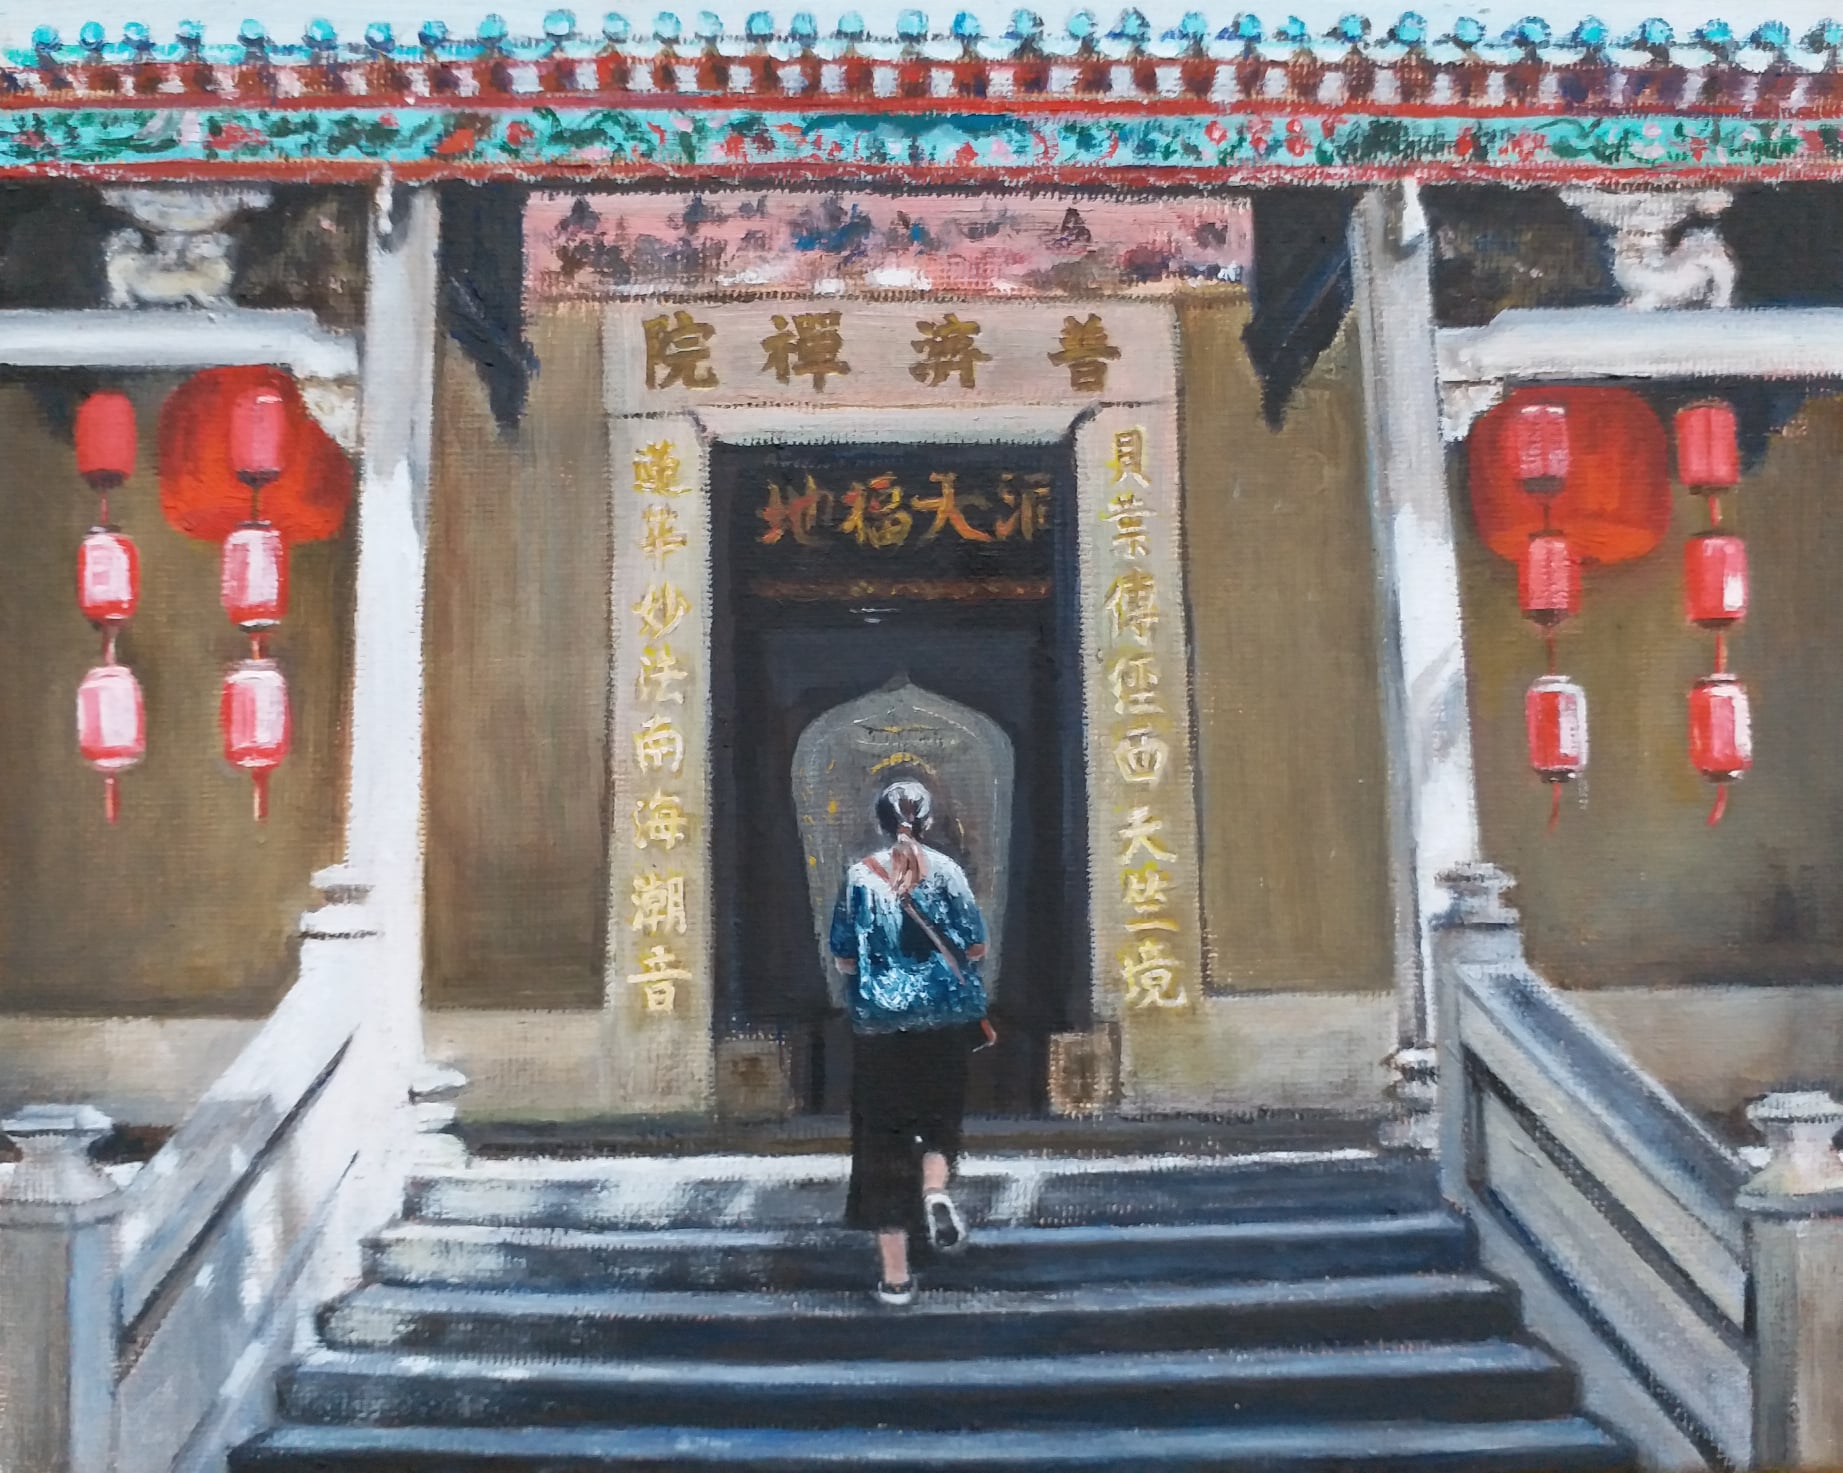 Pou Chai Temple Gate 普濟禪院 (A Buddhist Temple) - Signed Print Copy on Linen + Jpeg + Painting Video